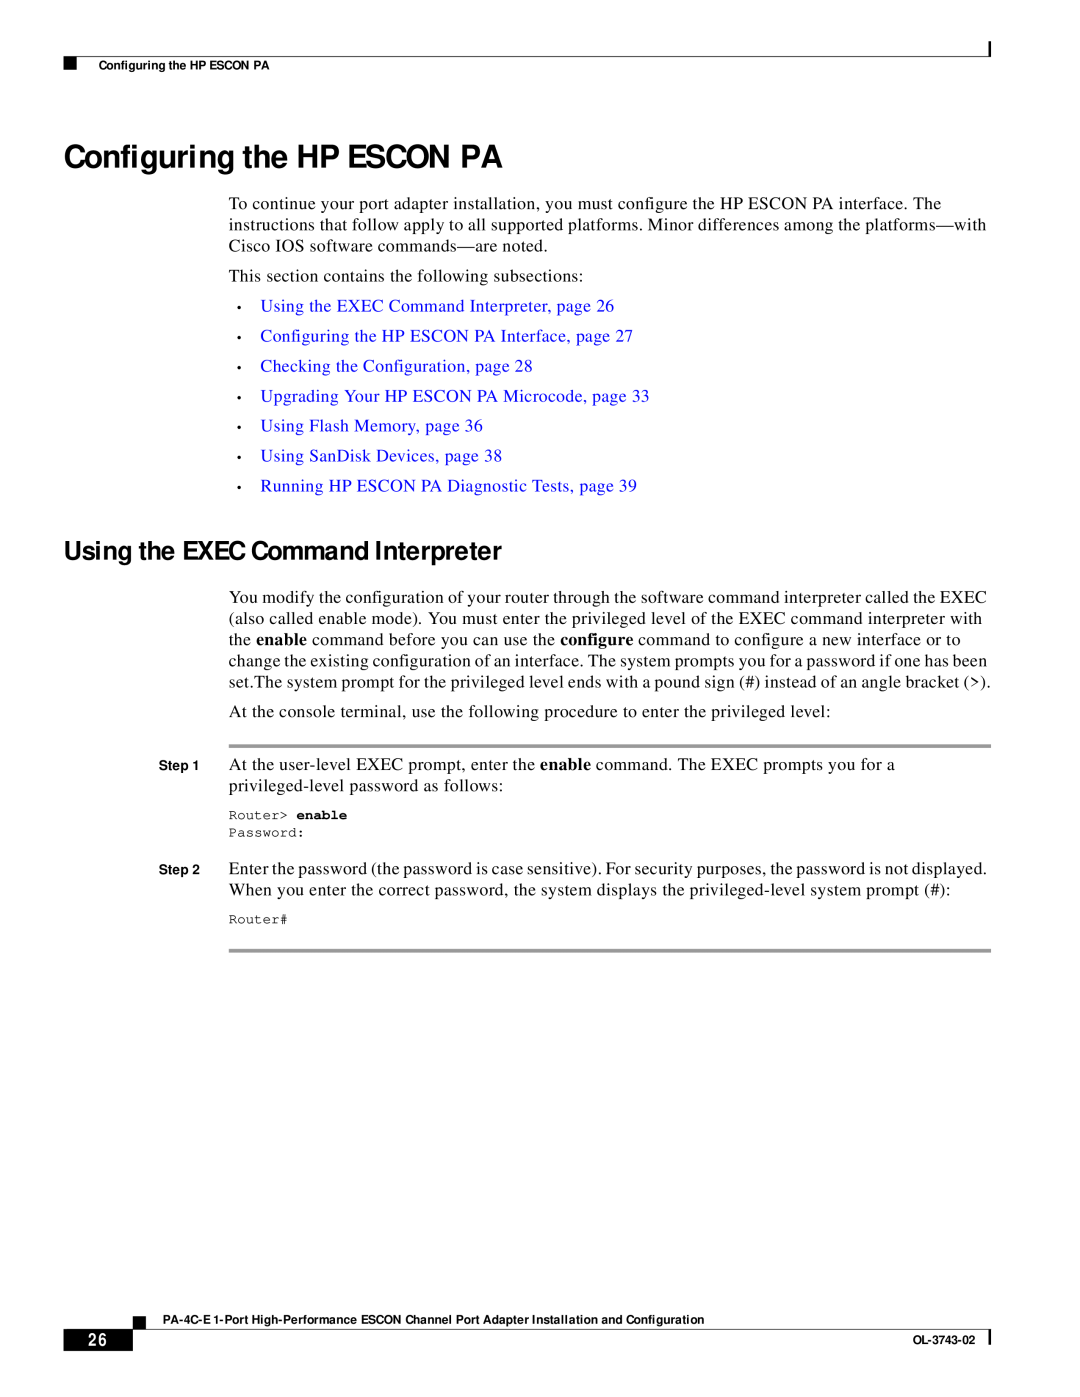 Cisco Systems PA-4C-E 1 Configuring the HP ESCON PA, Using the EXEC Command Interpreter, Checking the Configuration, page 